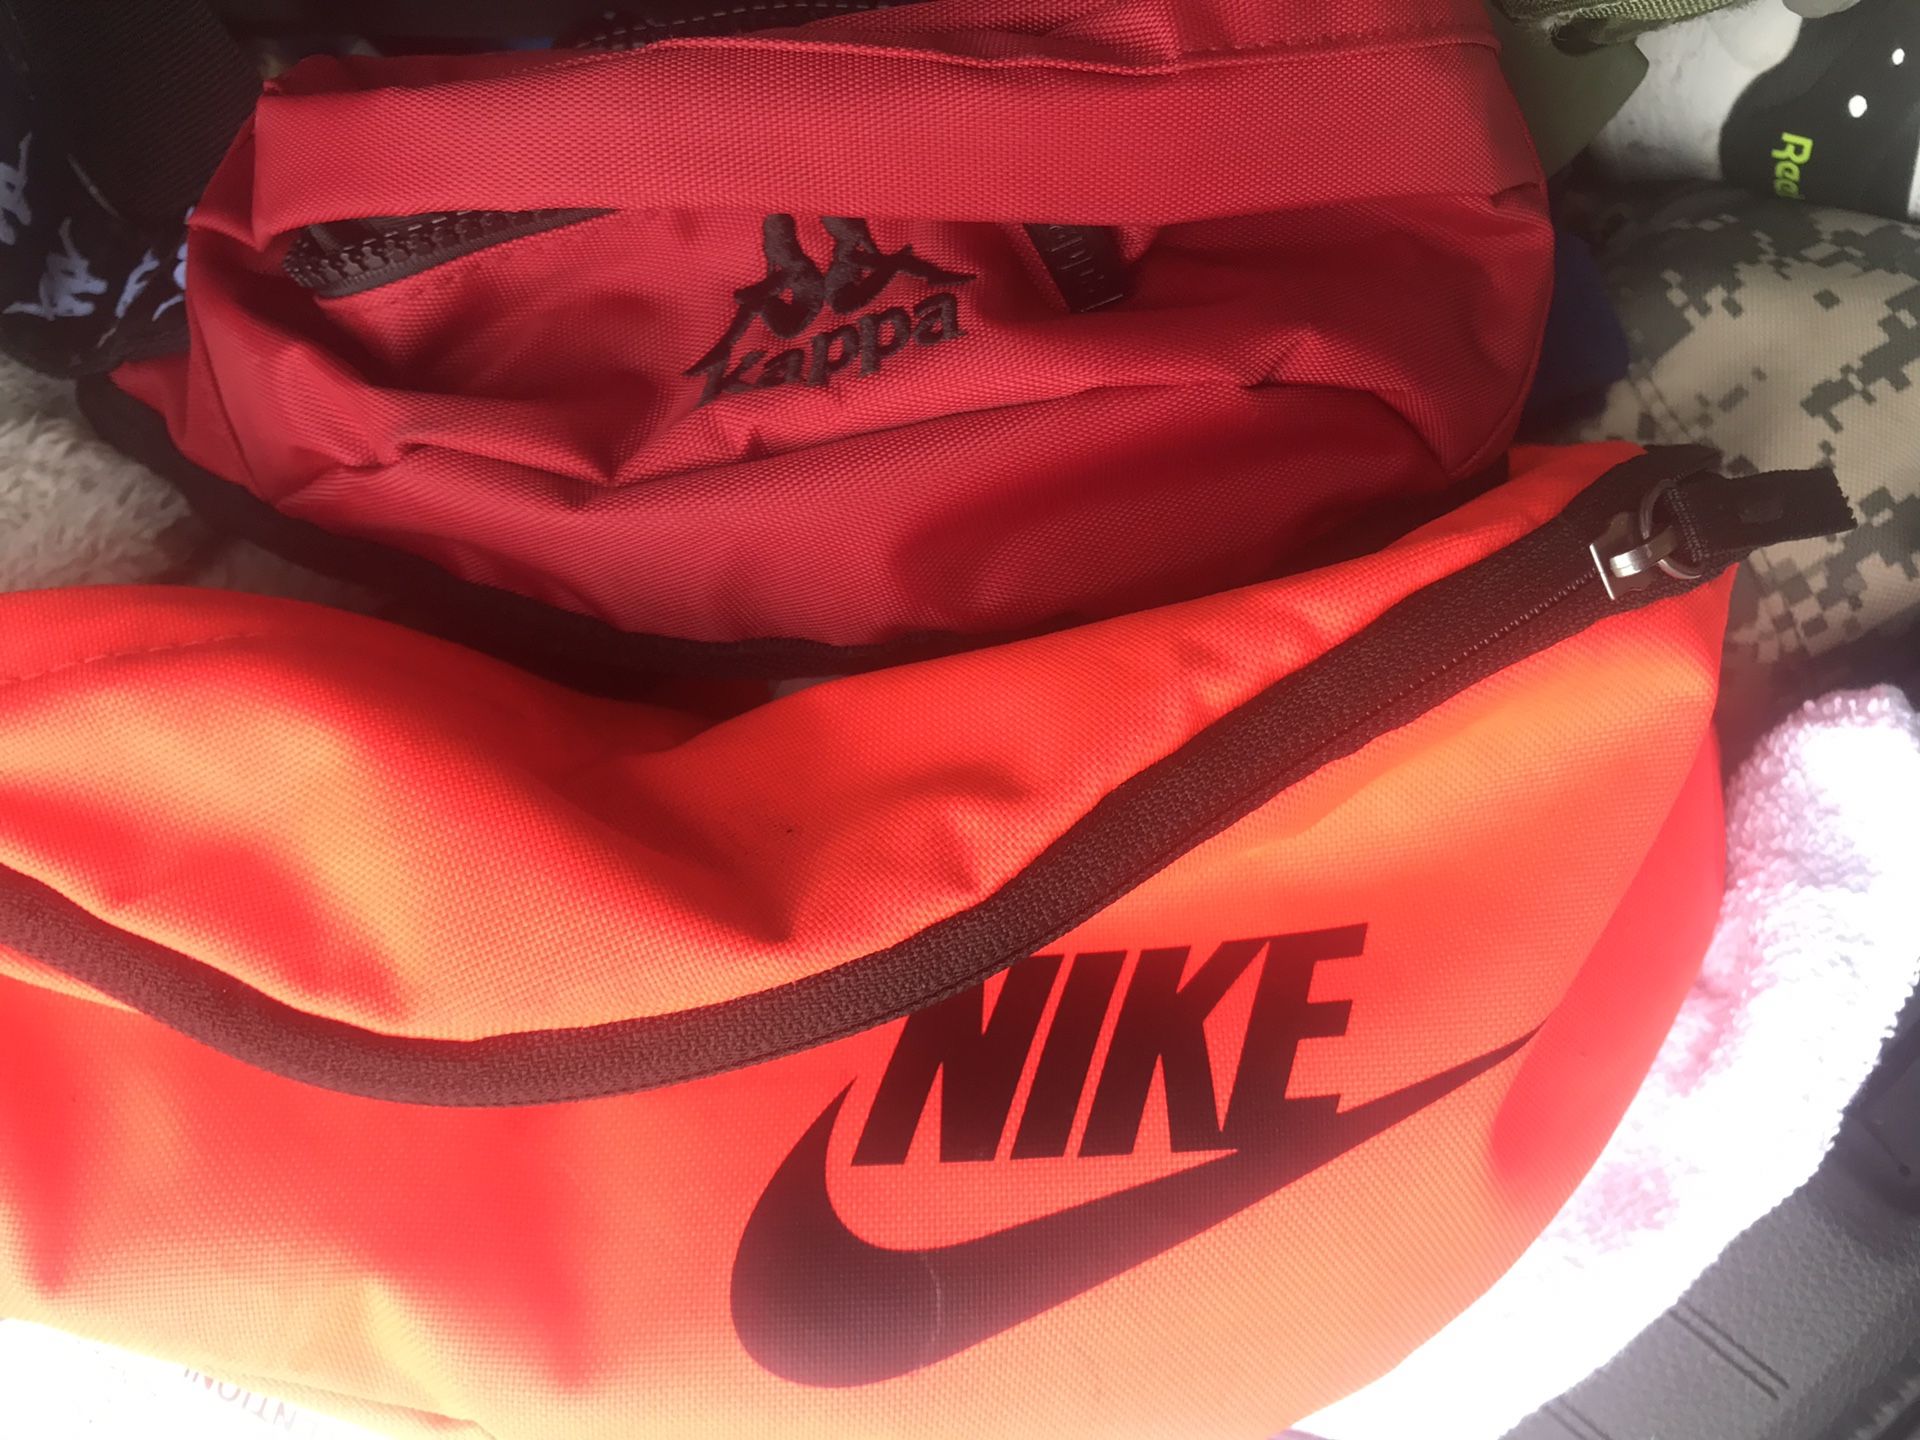 Nike and kappa fanny packs